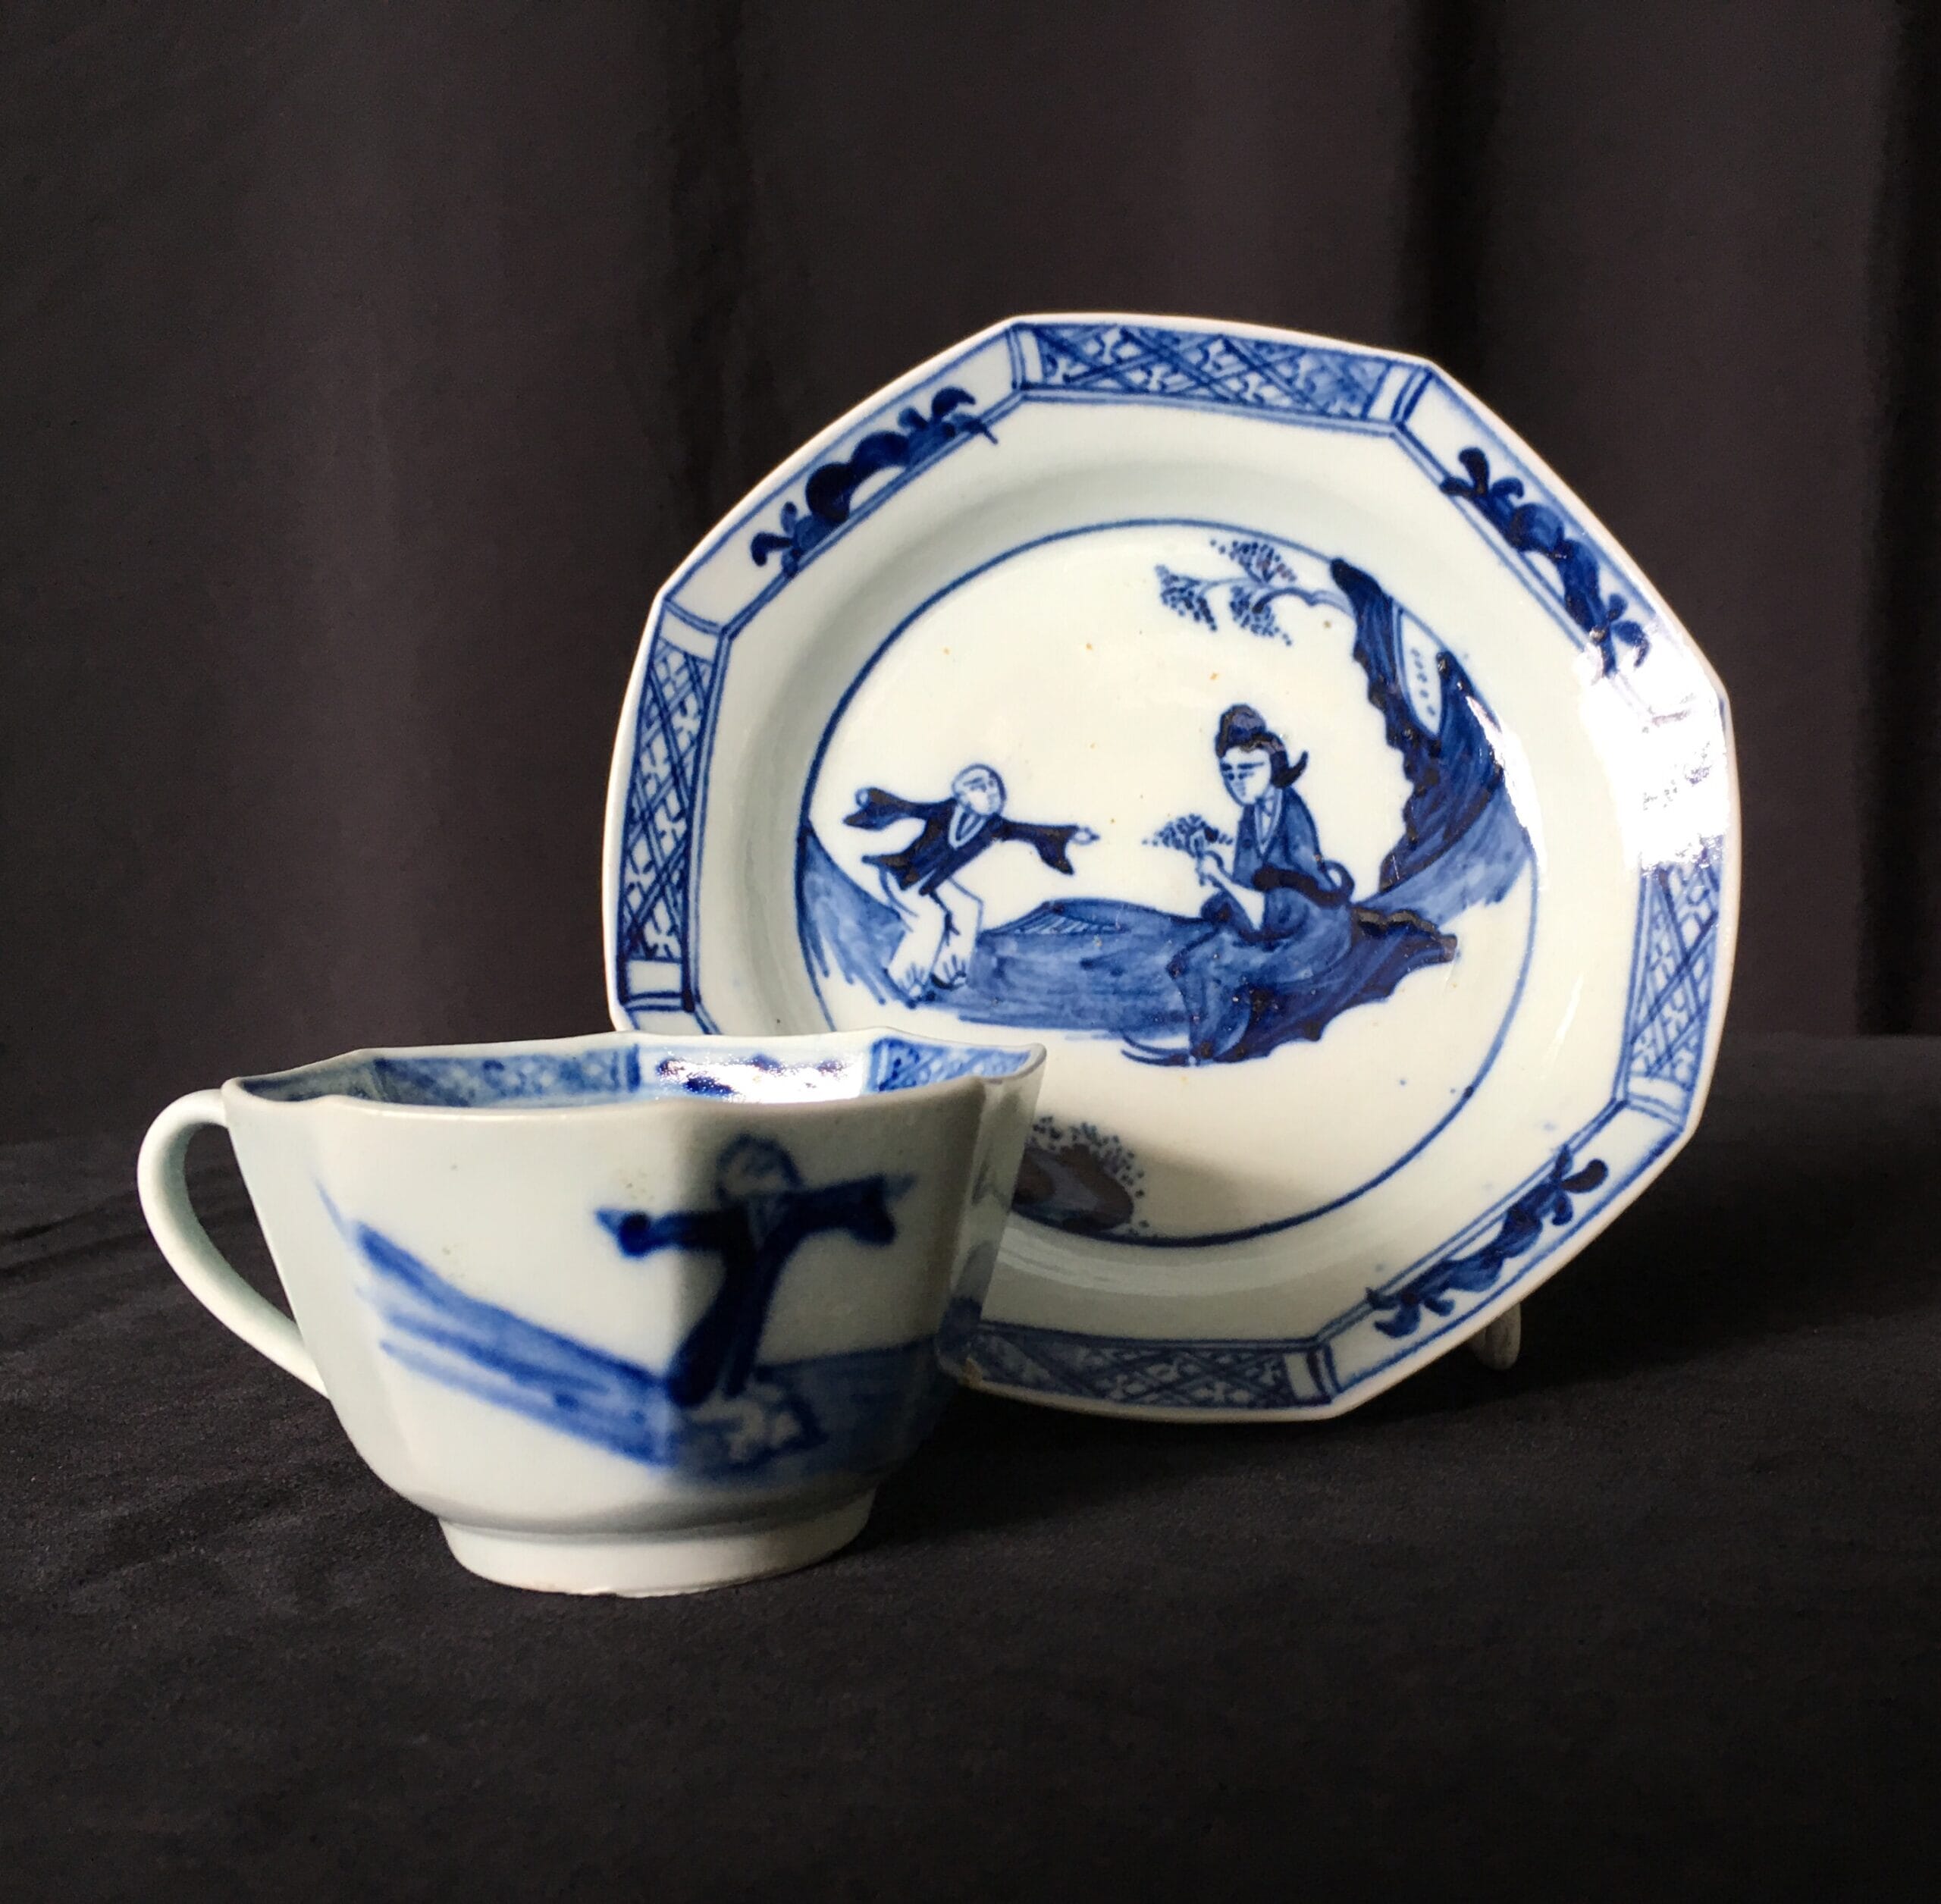 Rare Chaffers Liverpool octagonal cup & saucer, 'Jumping Boy' pattern, c. 1760-0